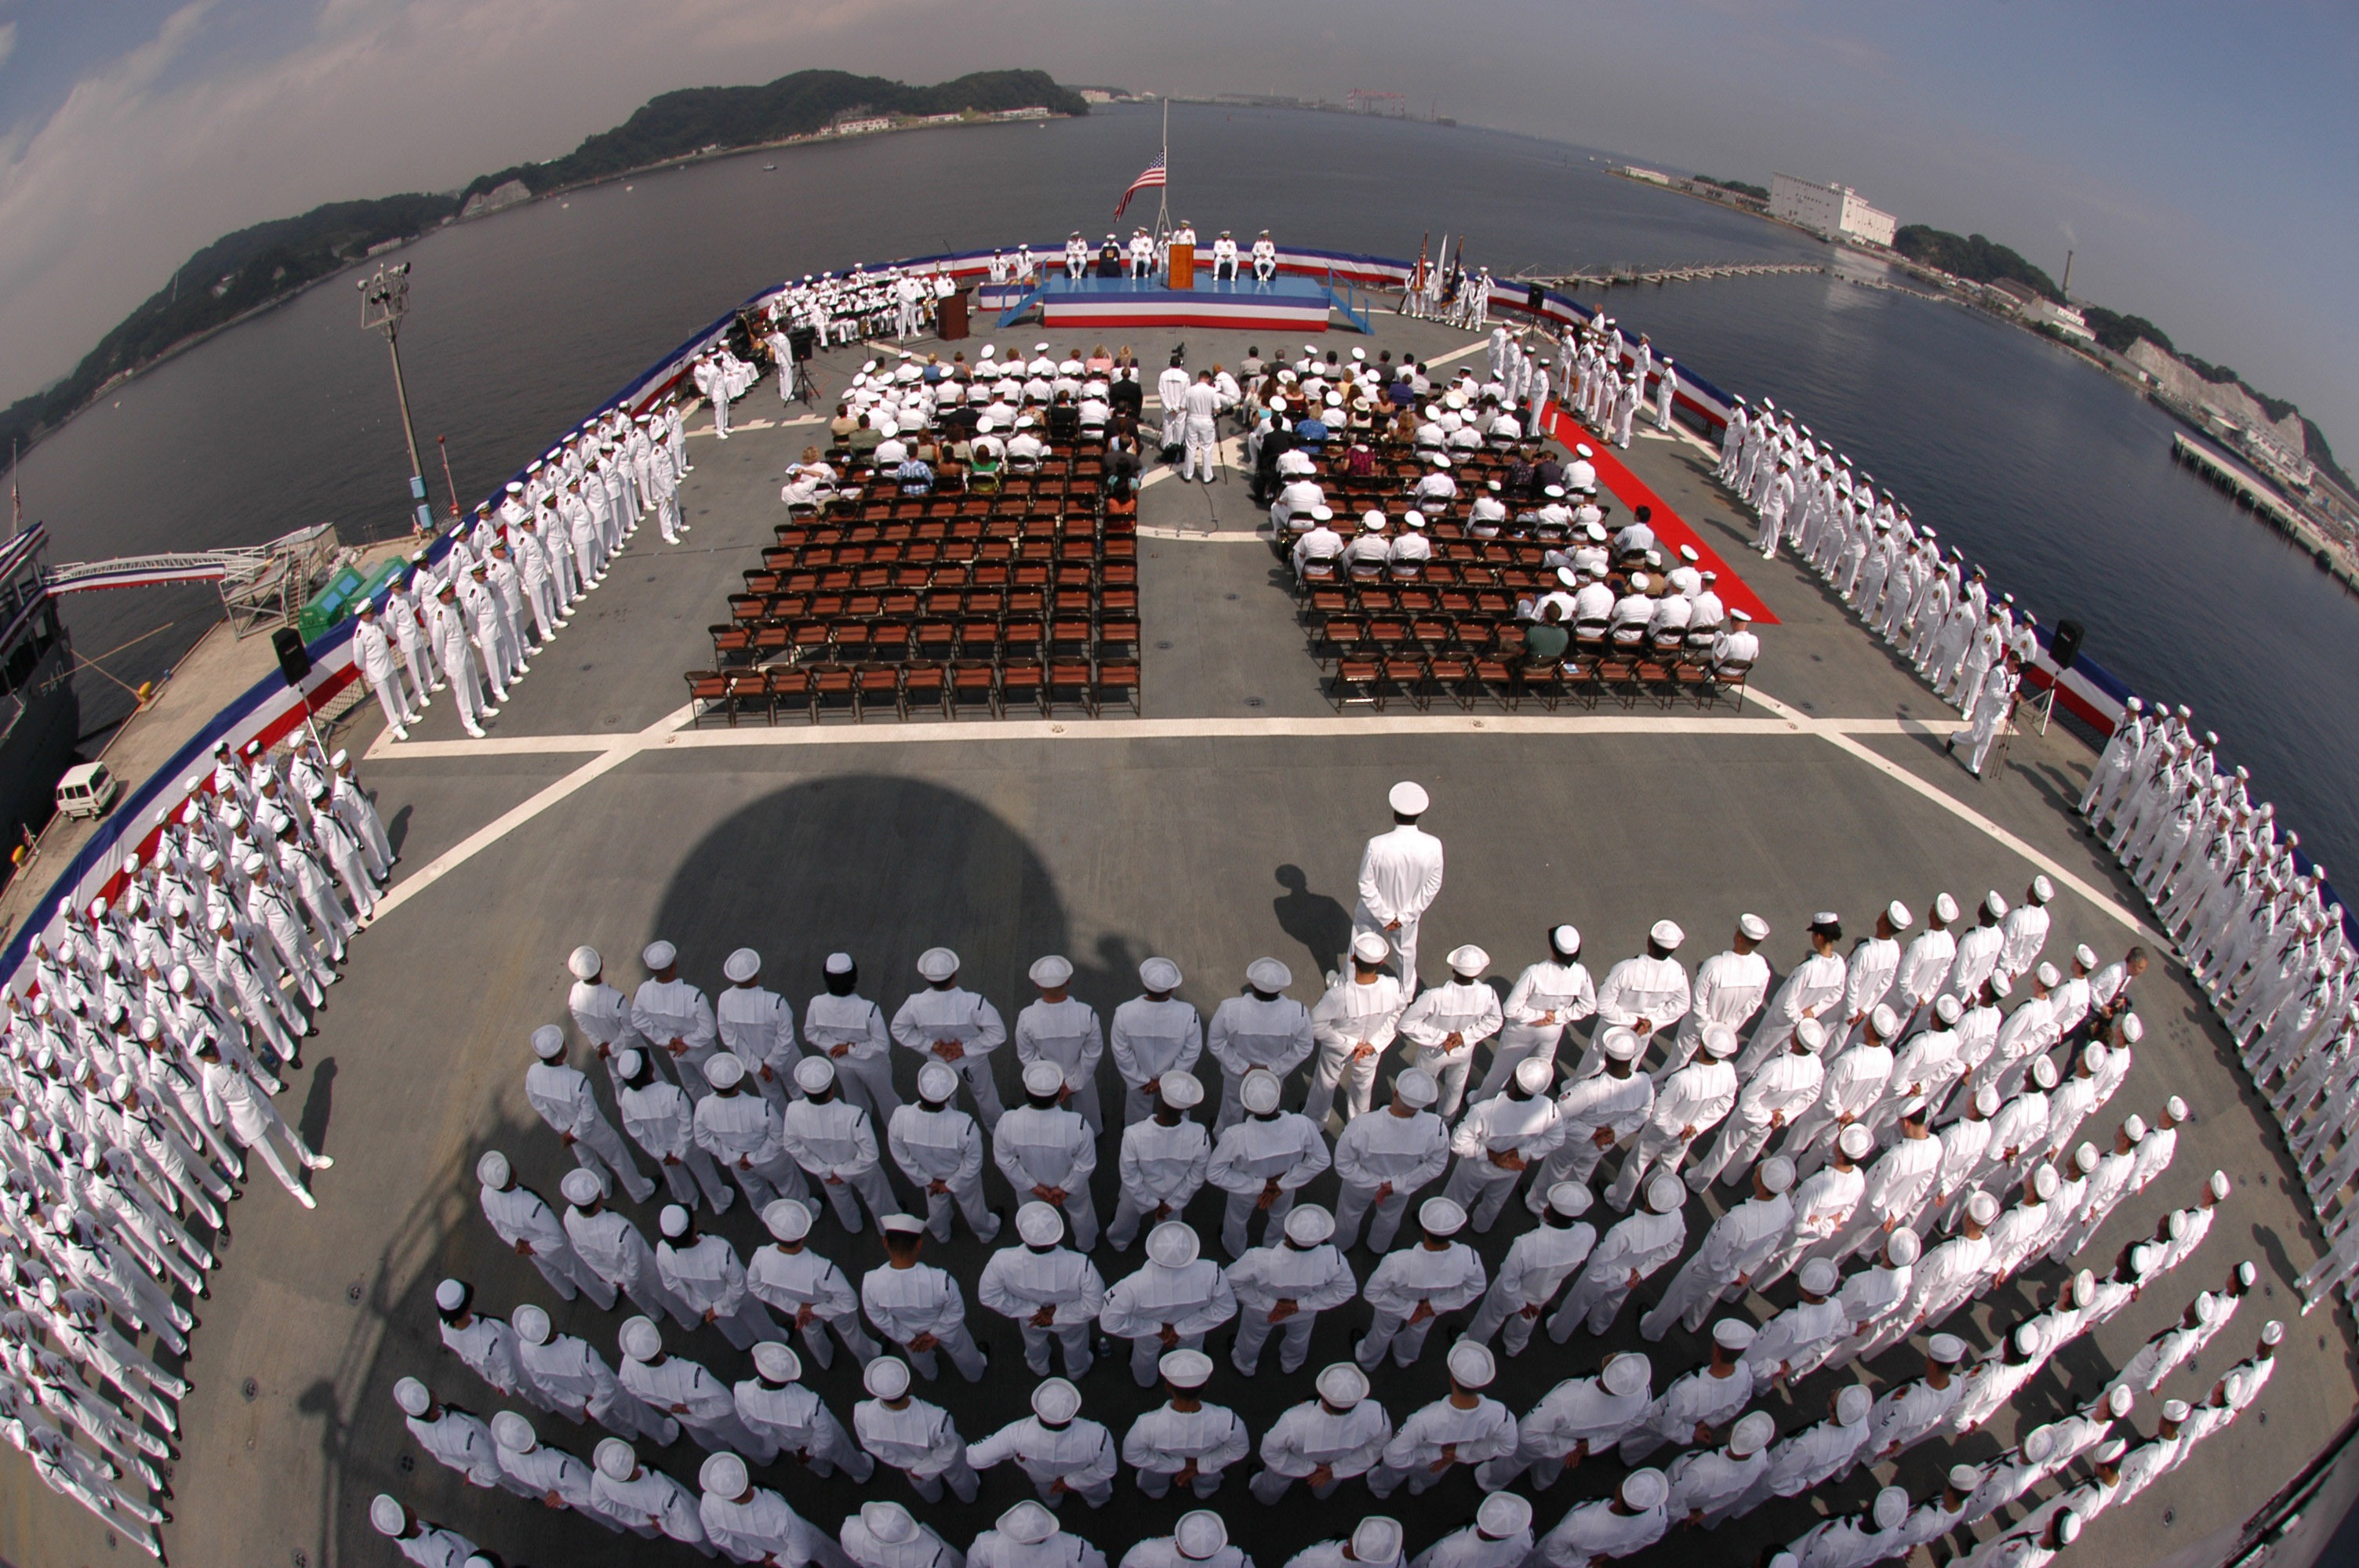 Sailors on board an aircraft carrier in Yokosuka Japan by 12019